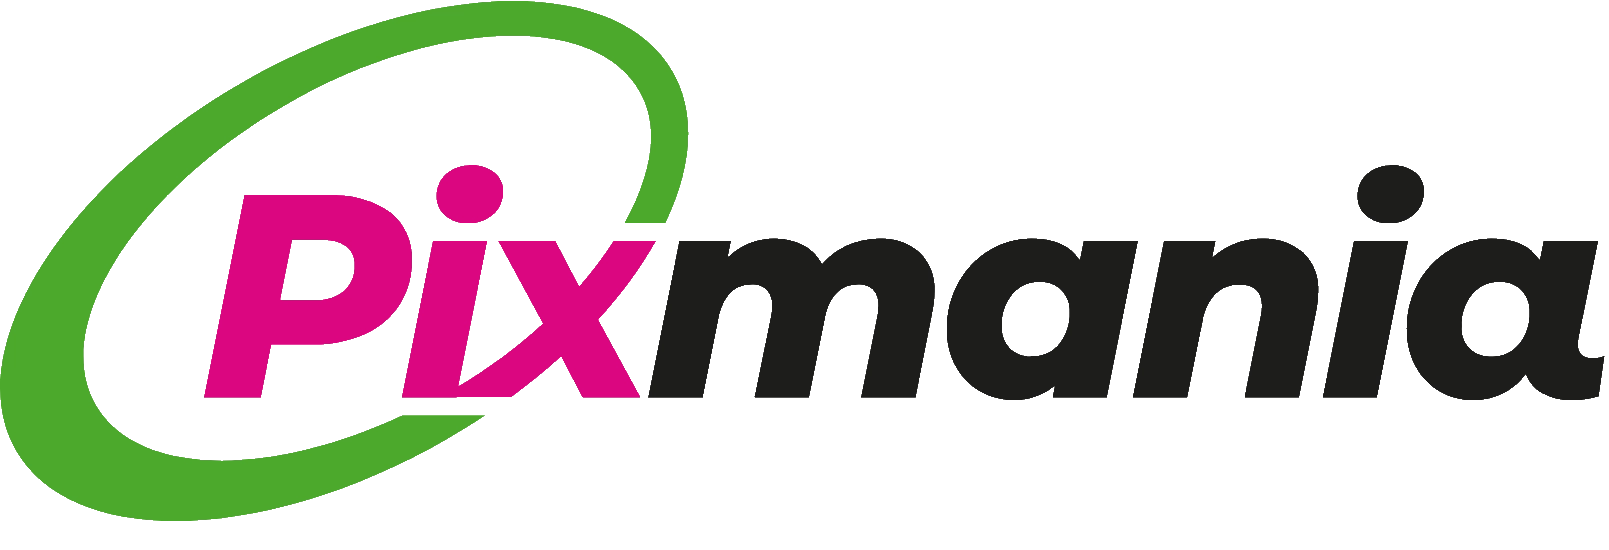 Pixmania integration